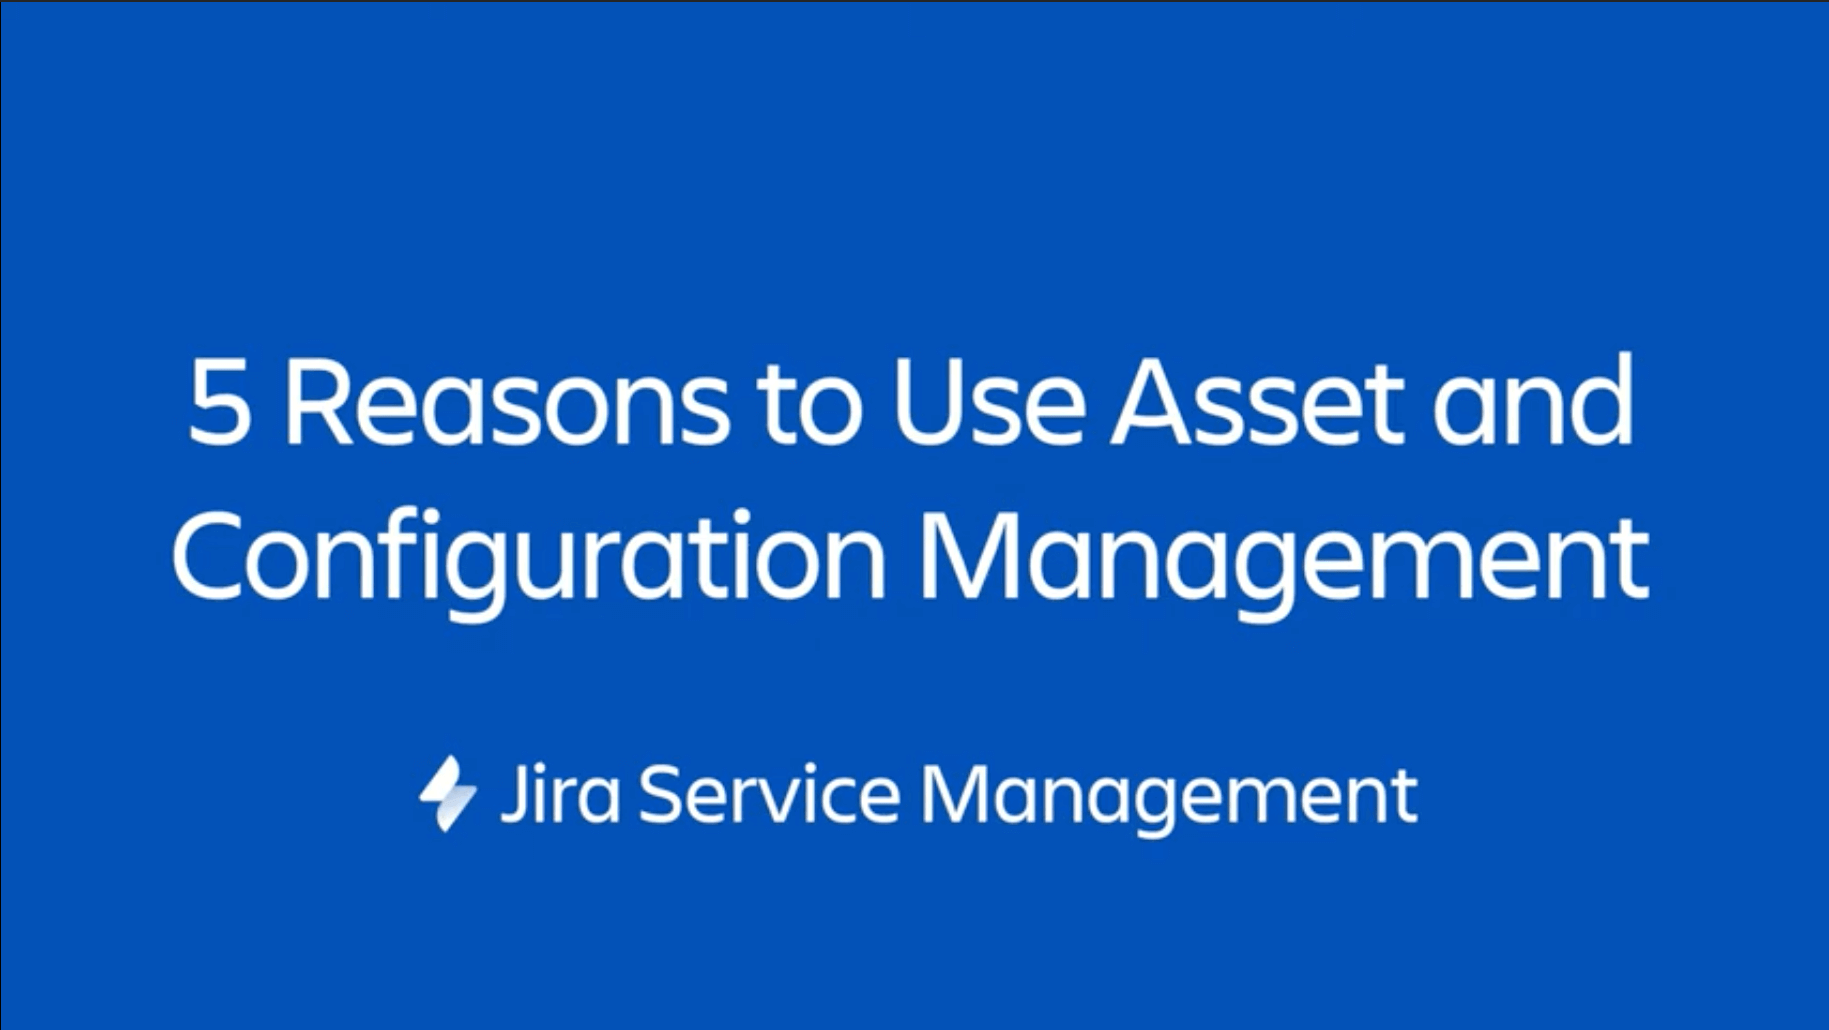 A Jira Service Management új szintre emeli a Jira Software-t